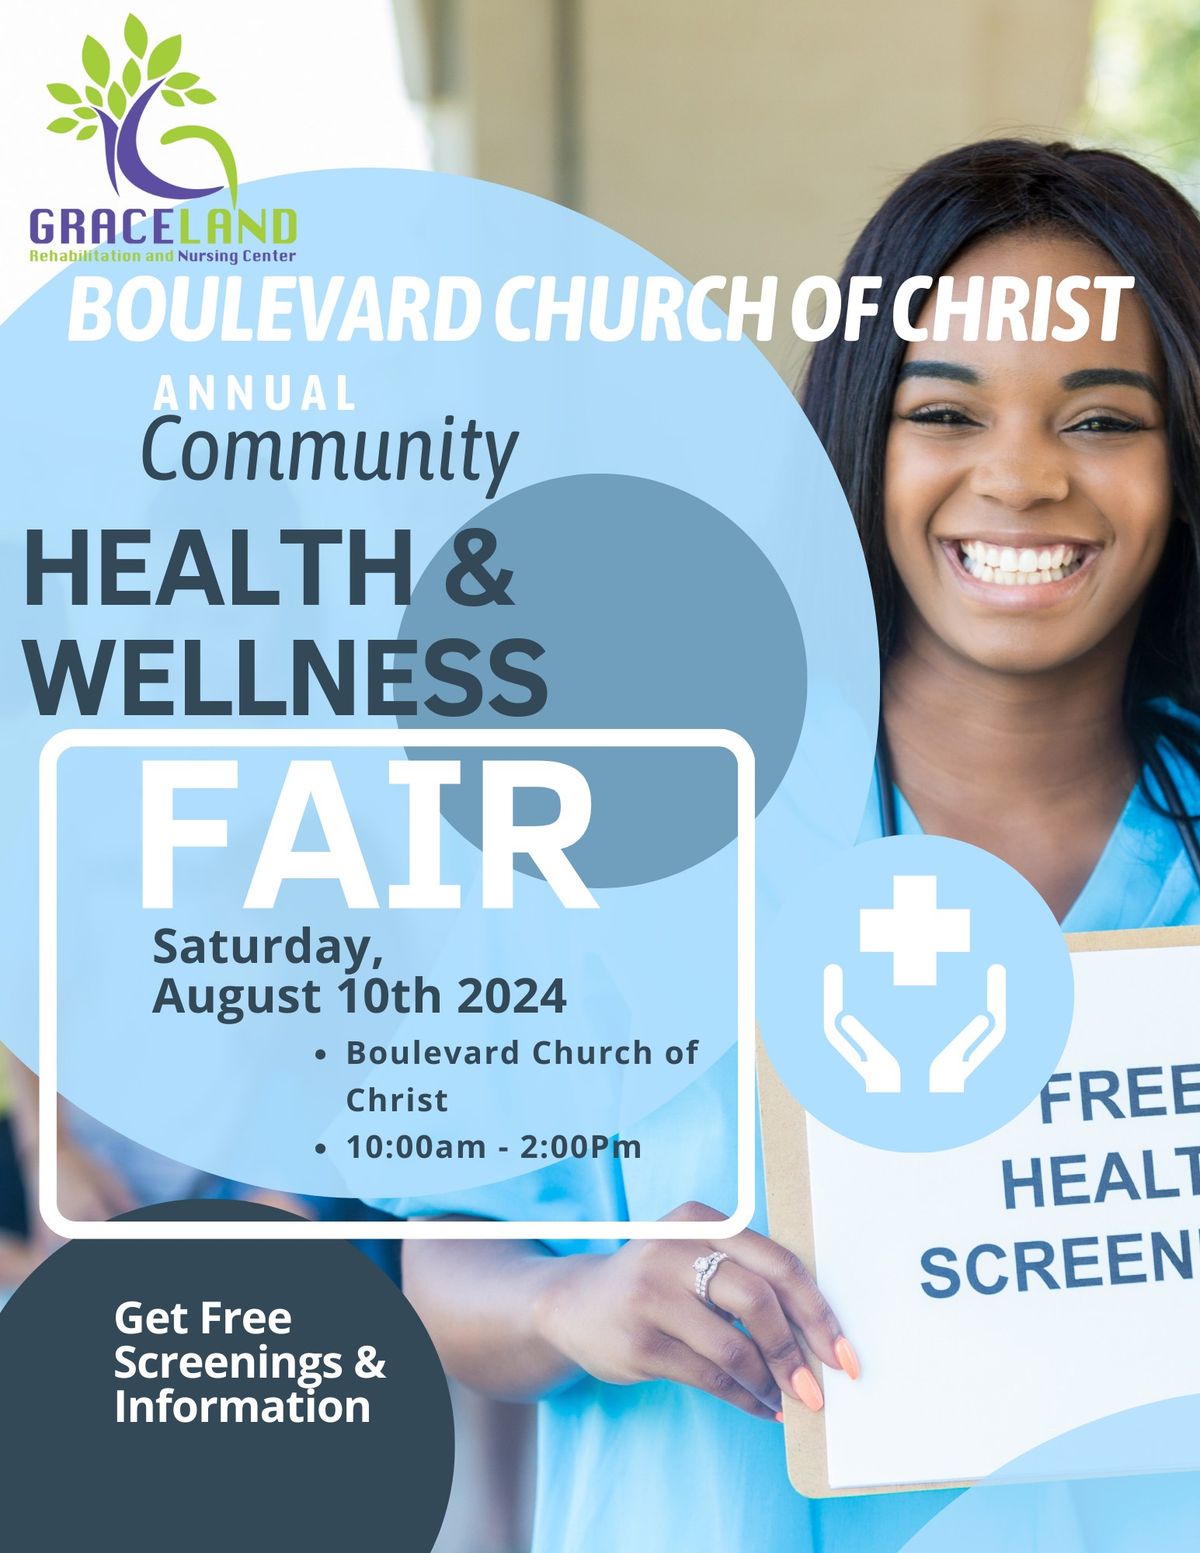 Graceland Rehab & Nursing Cntr. Community Event In Partnership W\/ Blvd Church Of Christ Health Fair